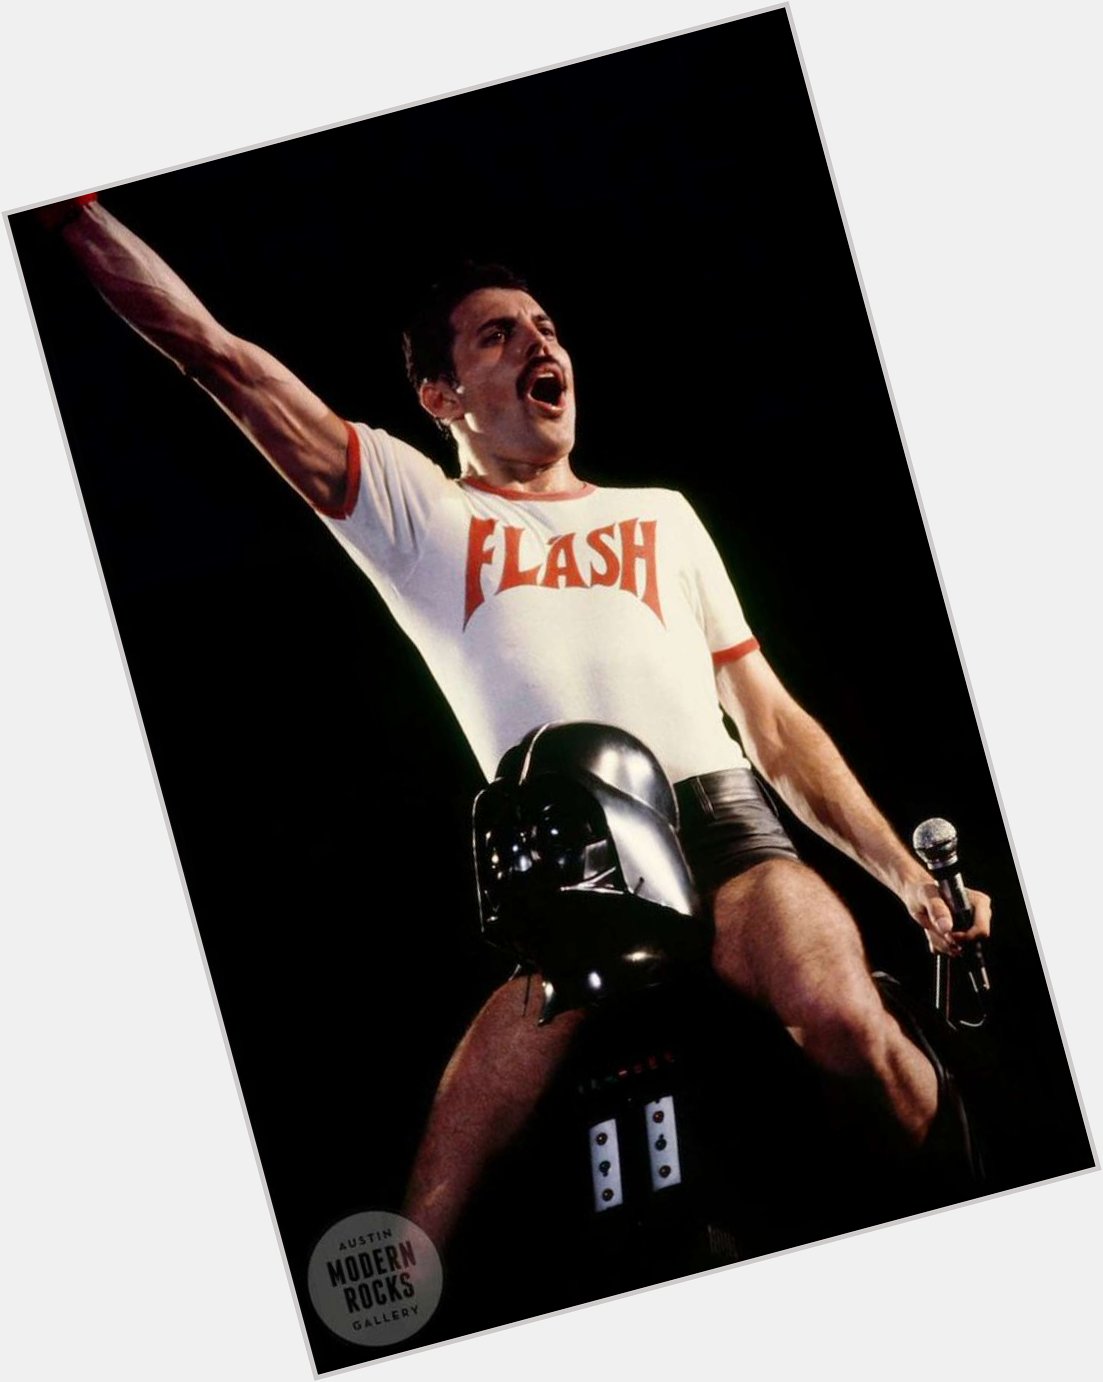 Happy birthday to Freddie Mercury (1946 - 1991). 